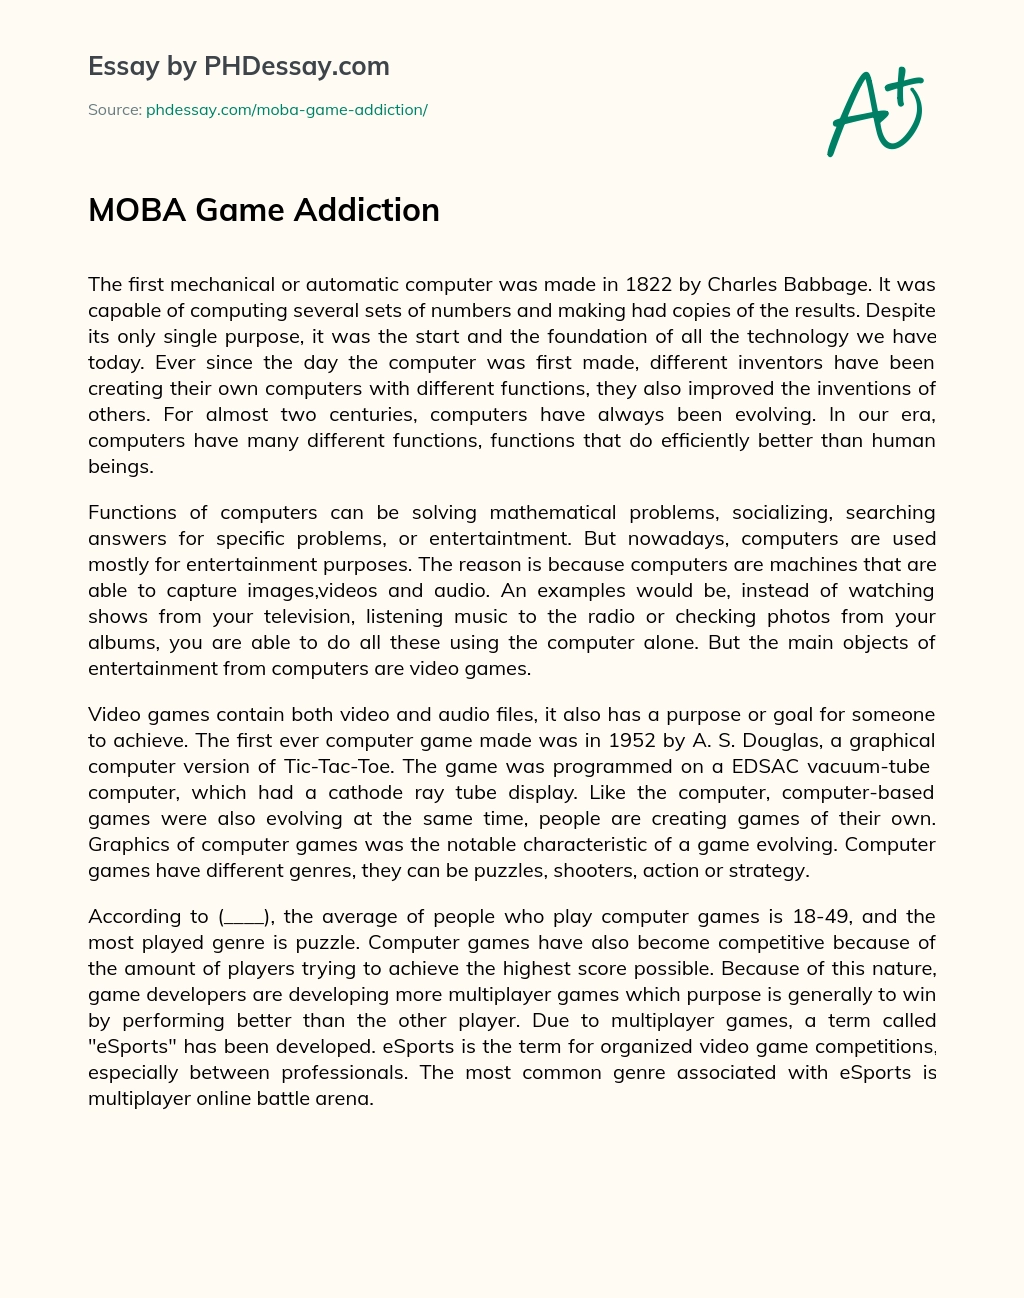 MOBA Game Addiction essay